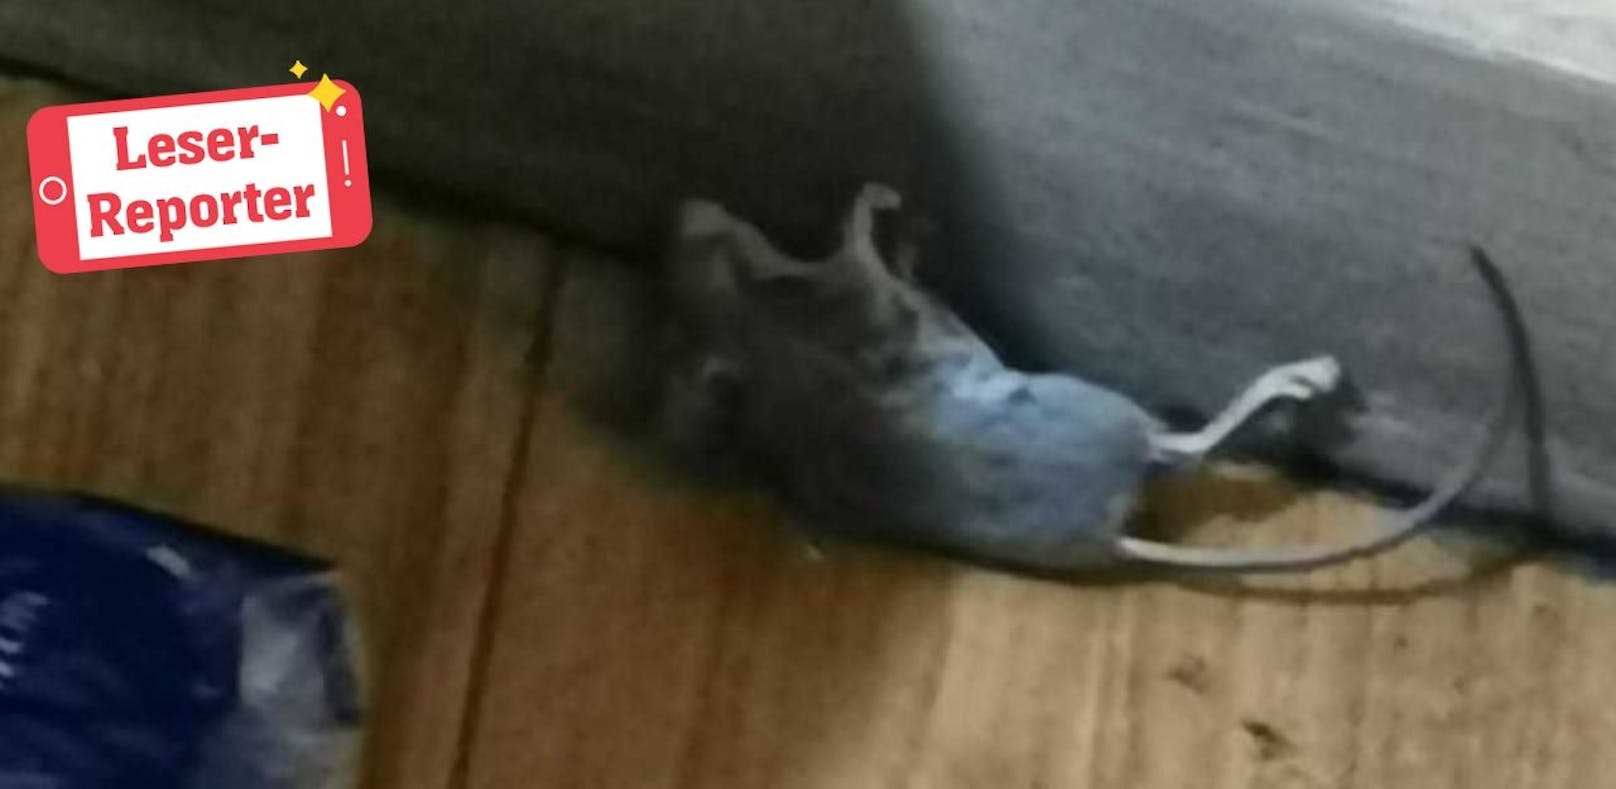 Tote Maus in Wiener Indoor Spielplatz gefunden